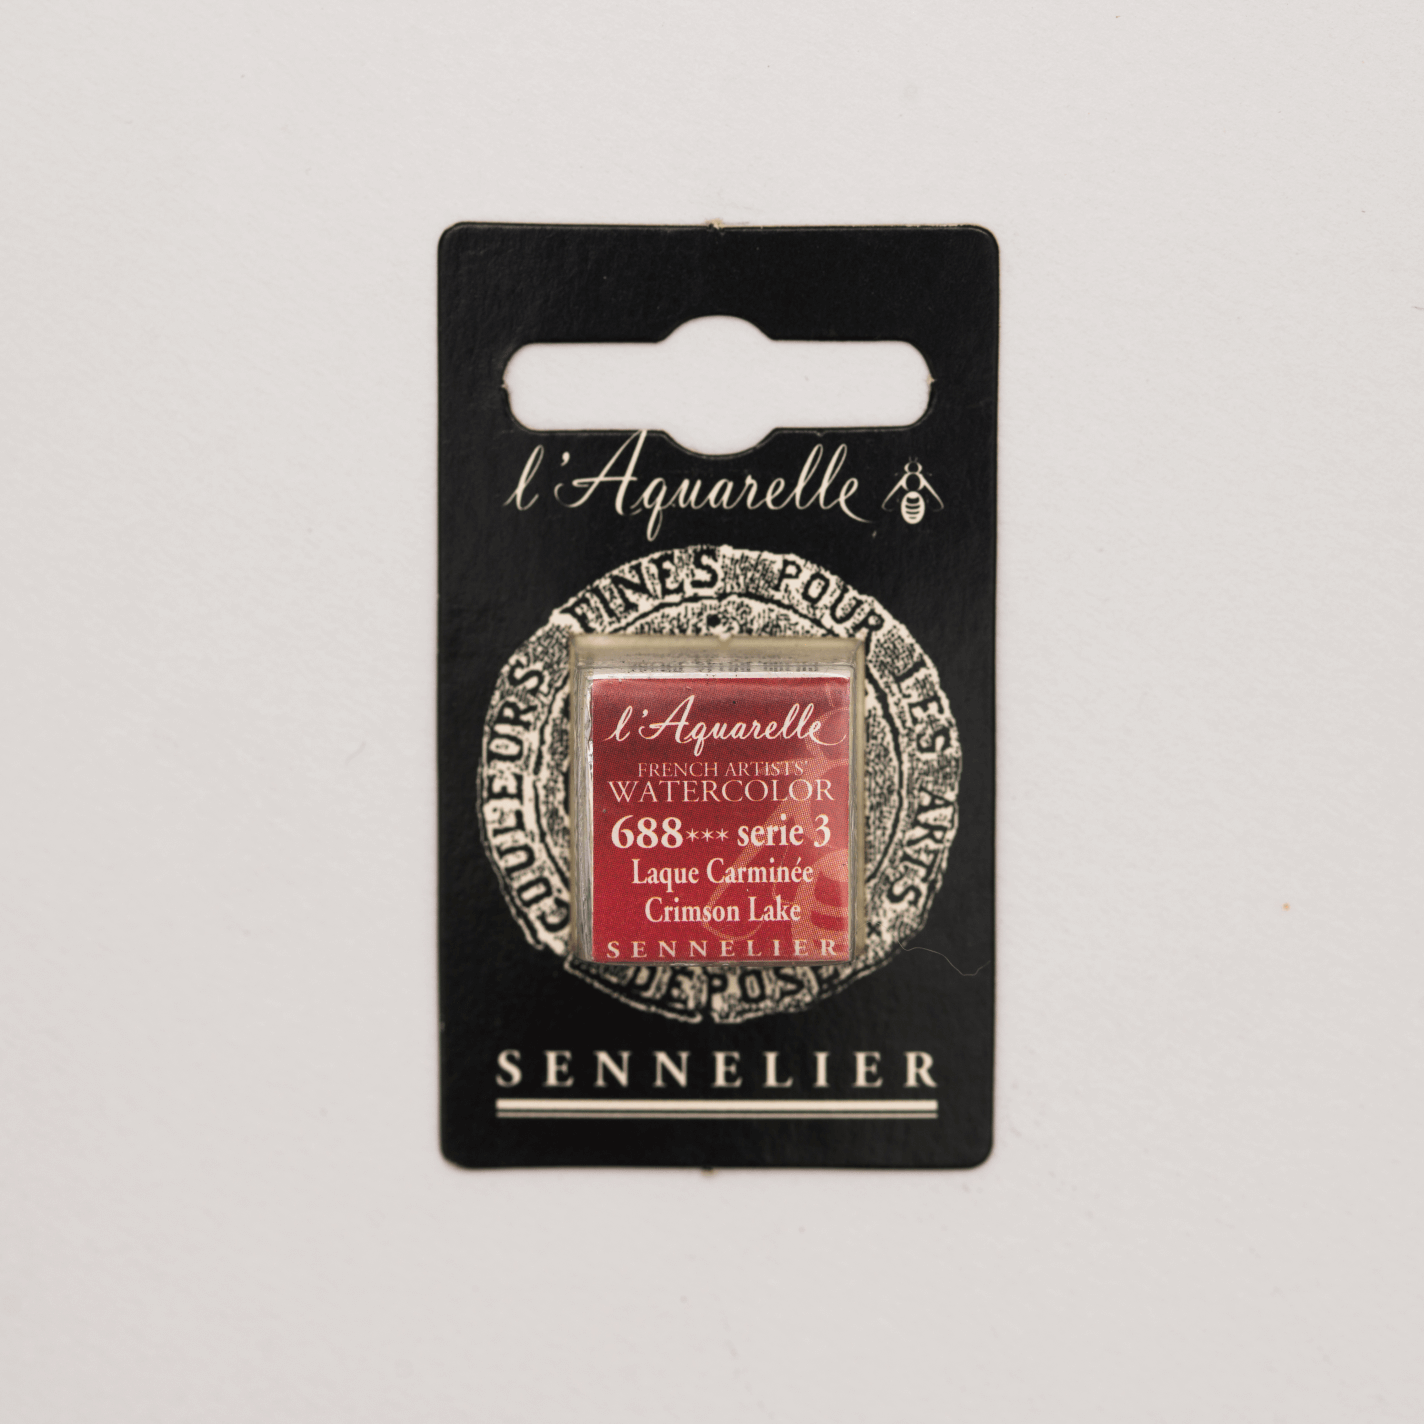 Sennelier Aquarelle pans 1/2 pan Crimson Lake